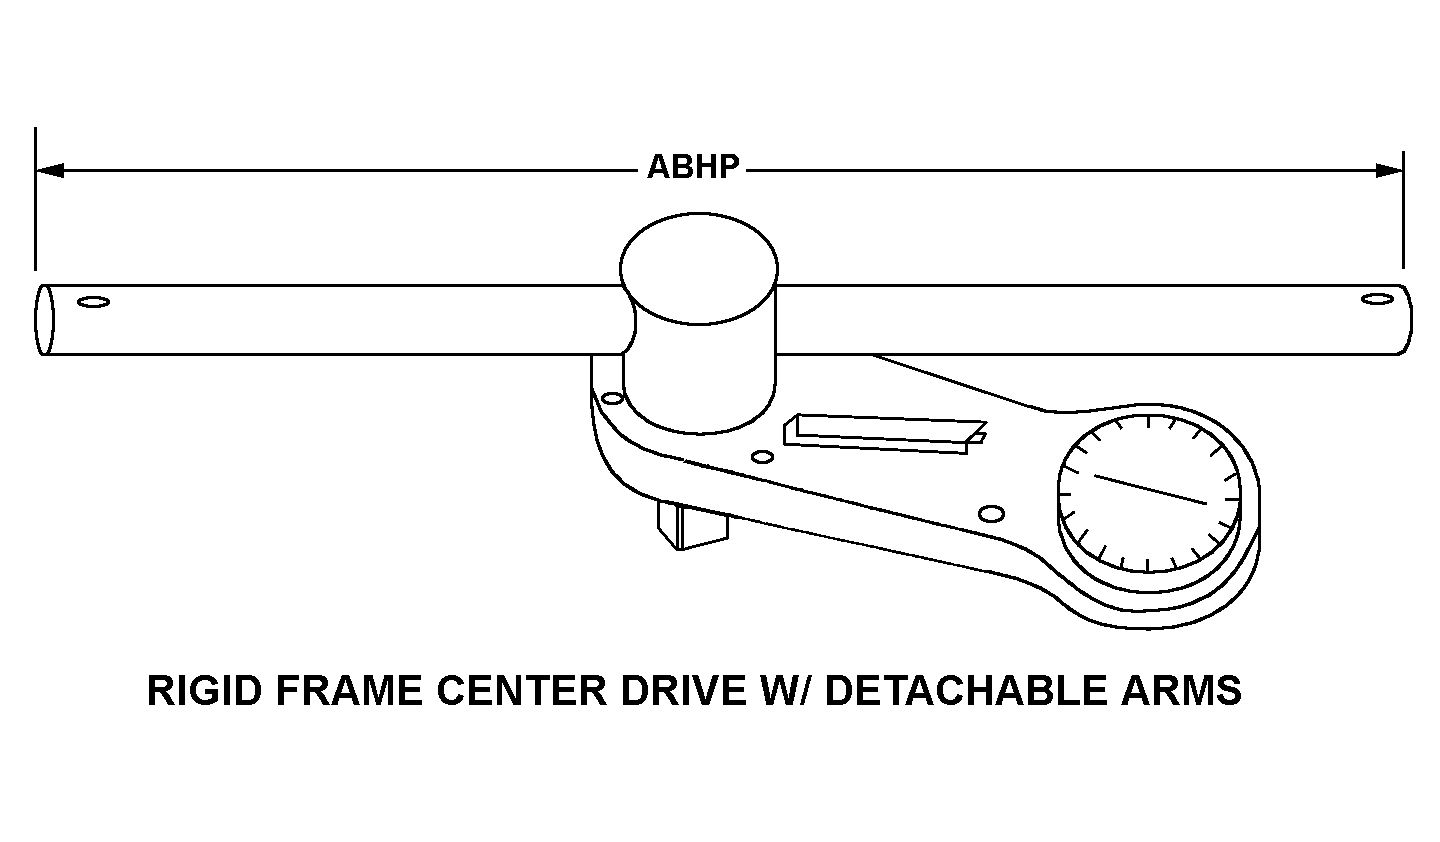 RIGID FRAME CENTER DRIVE W/DETACHABLE ARMS style nsn 5120-00-221-7981